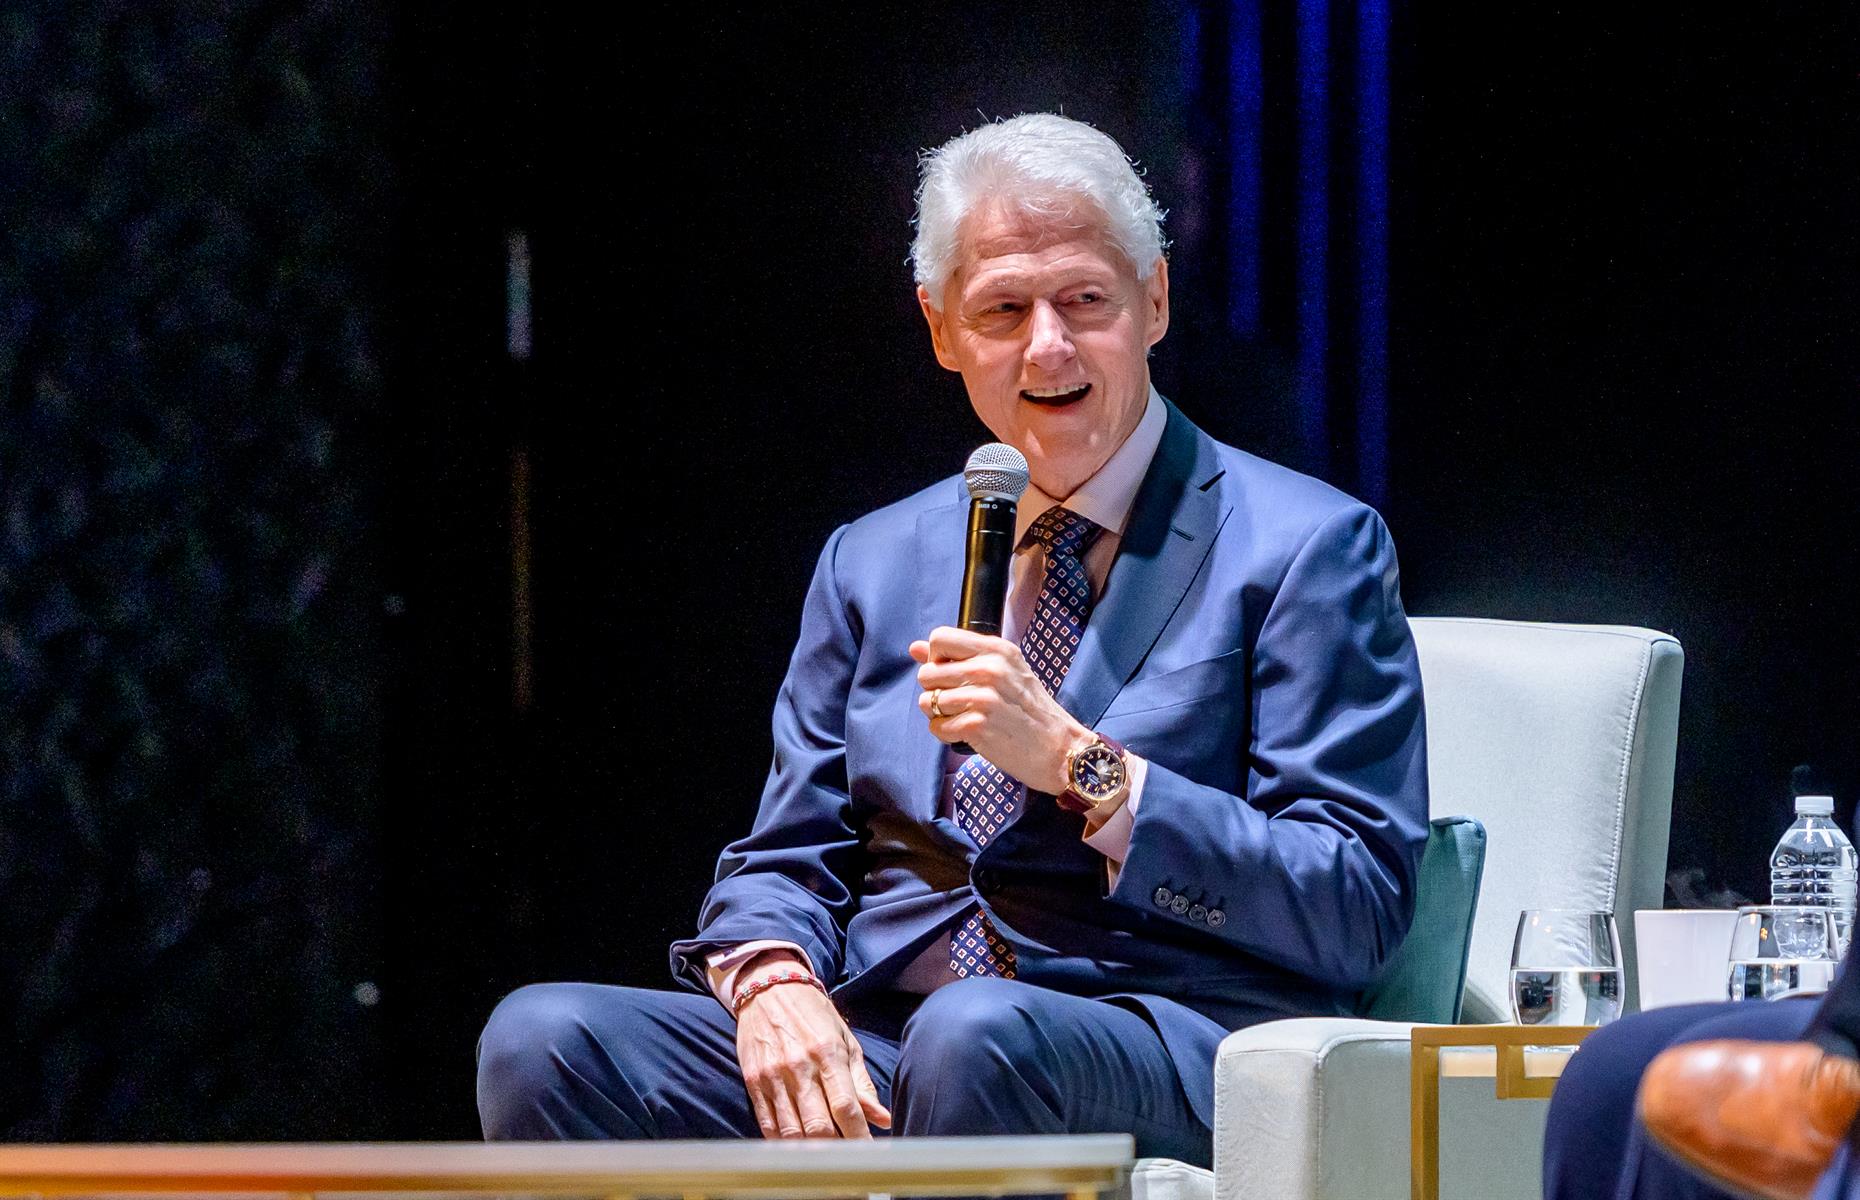 Rubbing shoulders with Bill Clinton